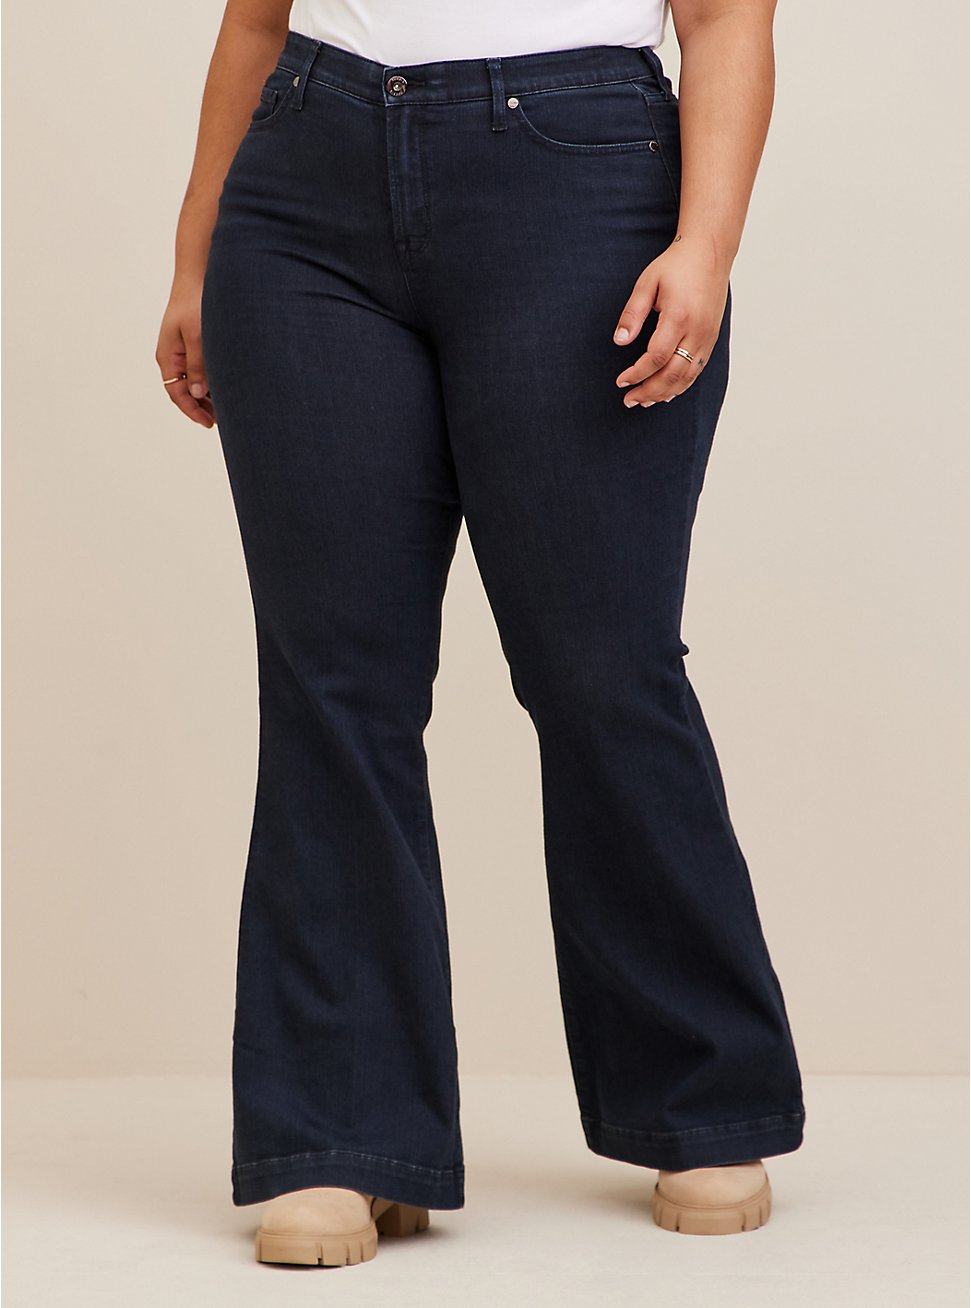 Dark Wash High Rise Flare Jeans For Apple Shape By torrid.com